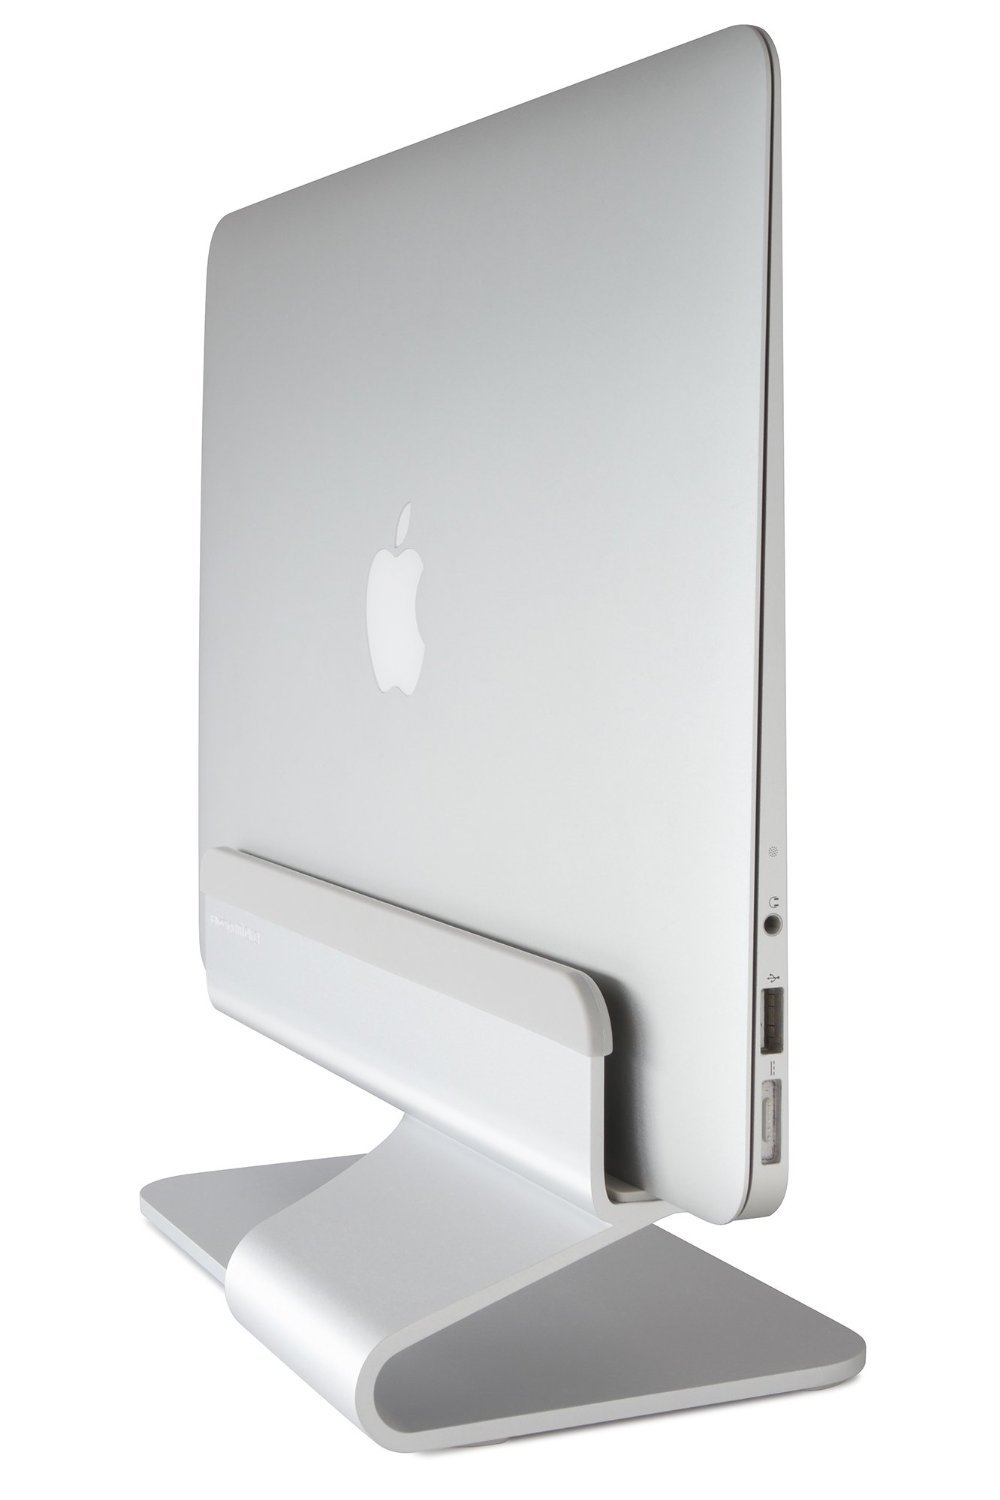 Macbook pro stand